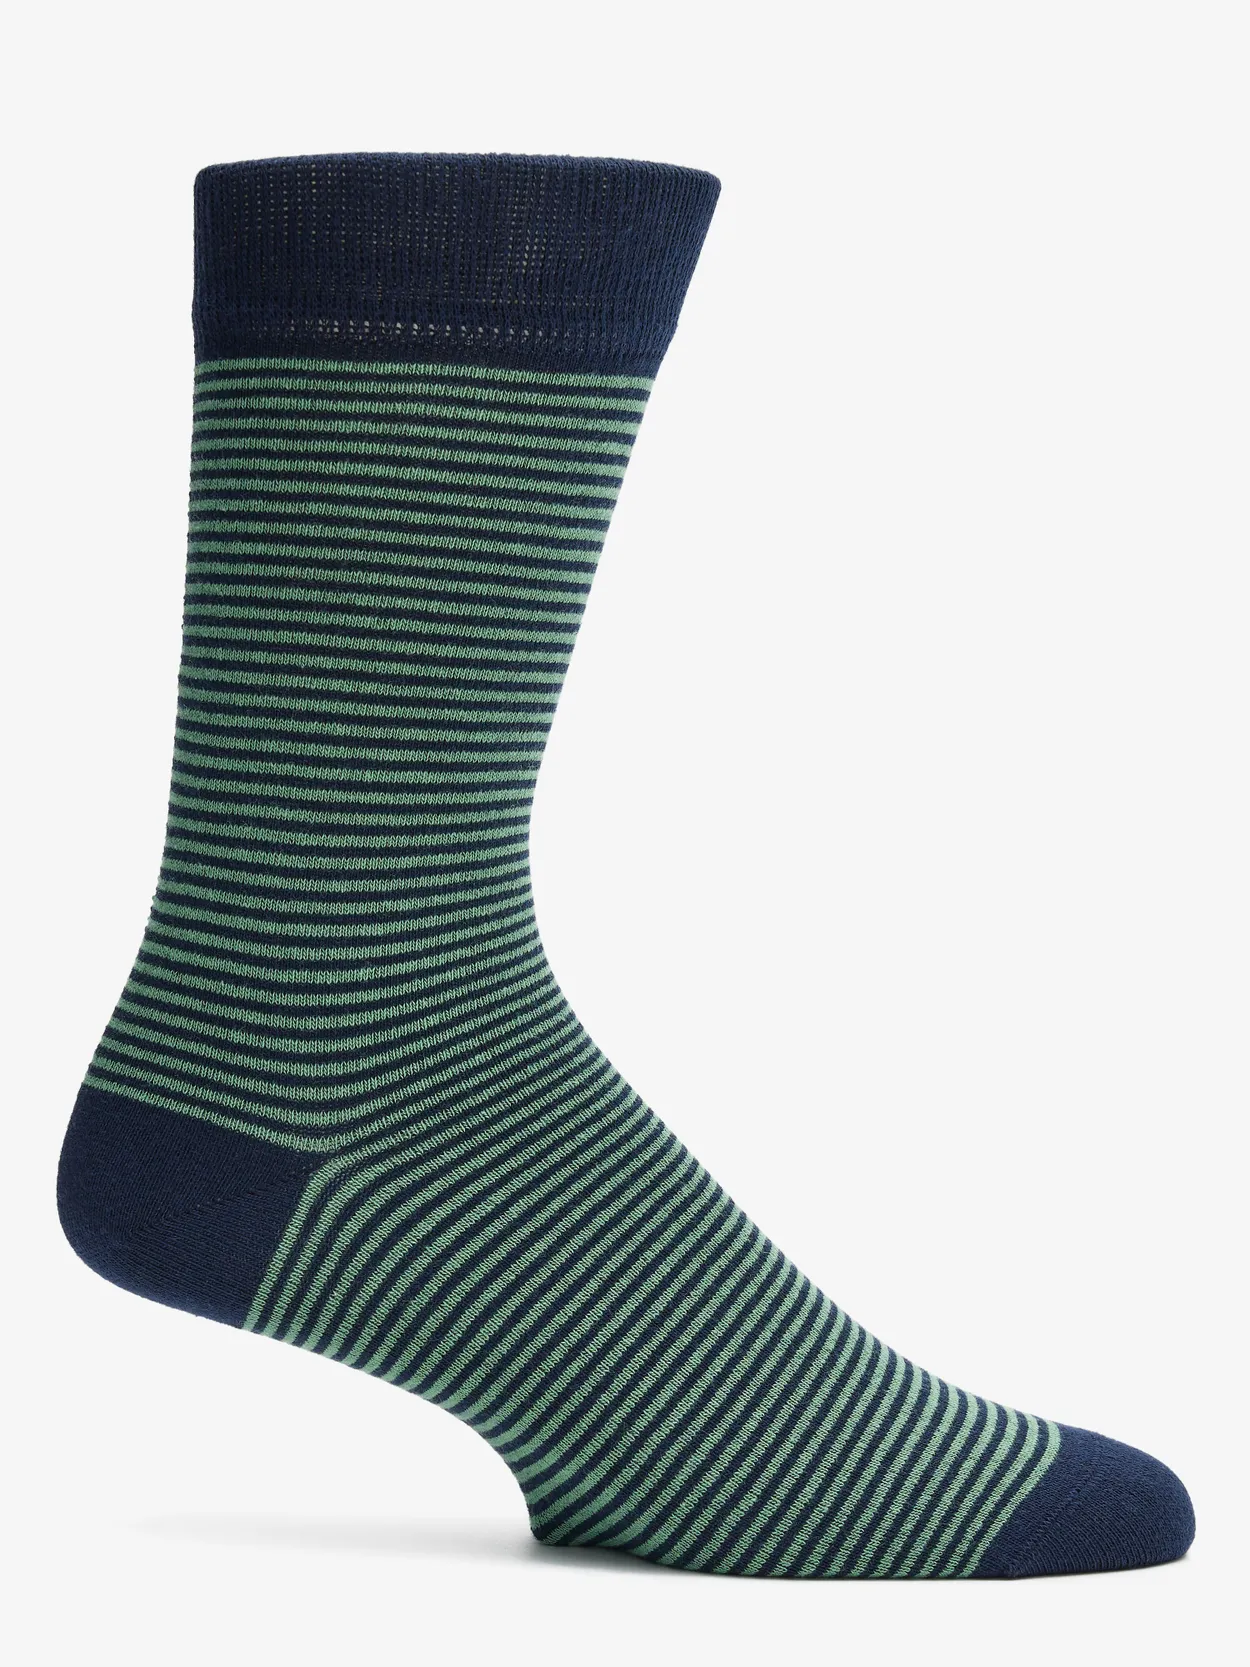 Blue & Green Socks Almeria